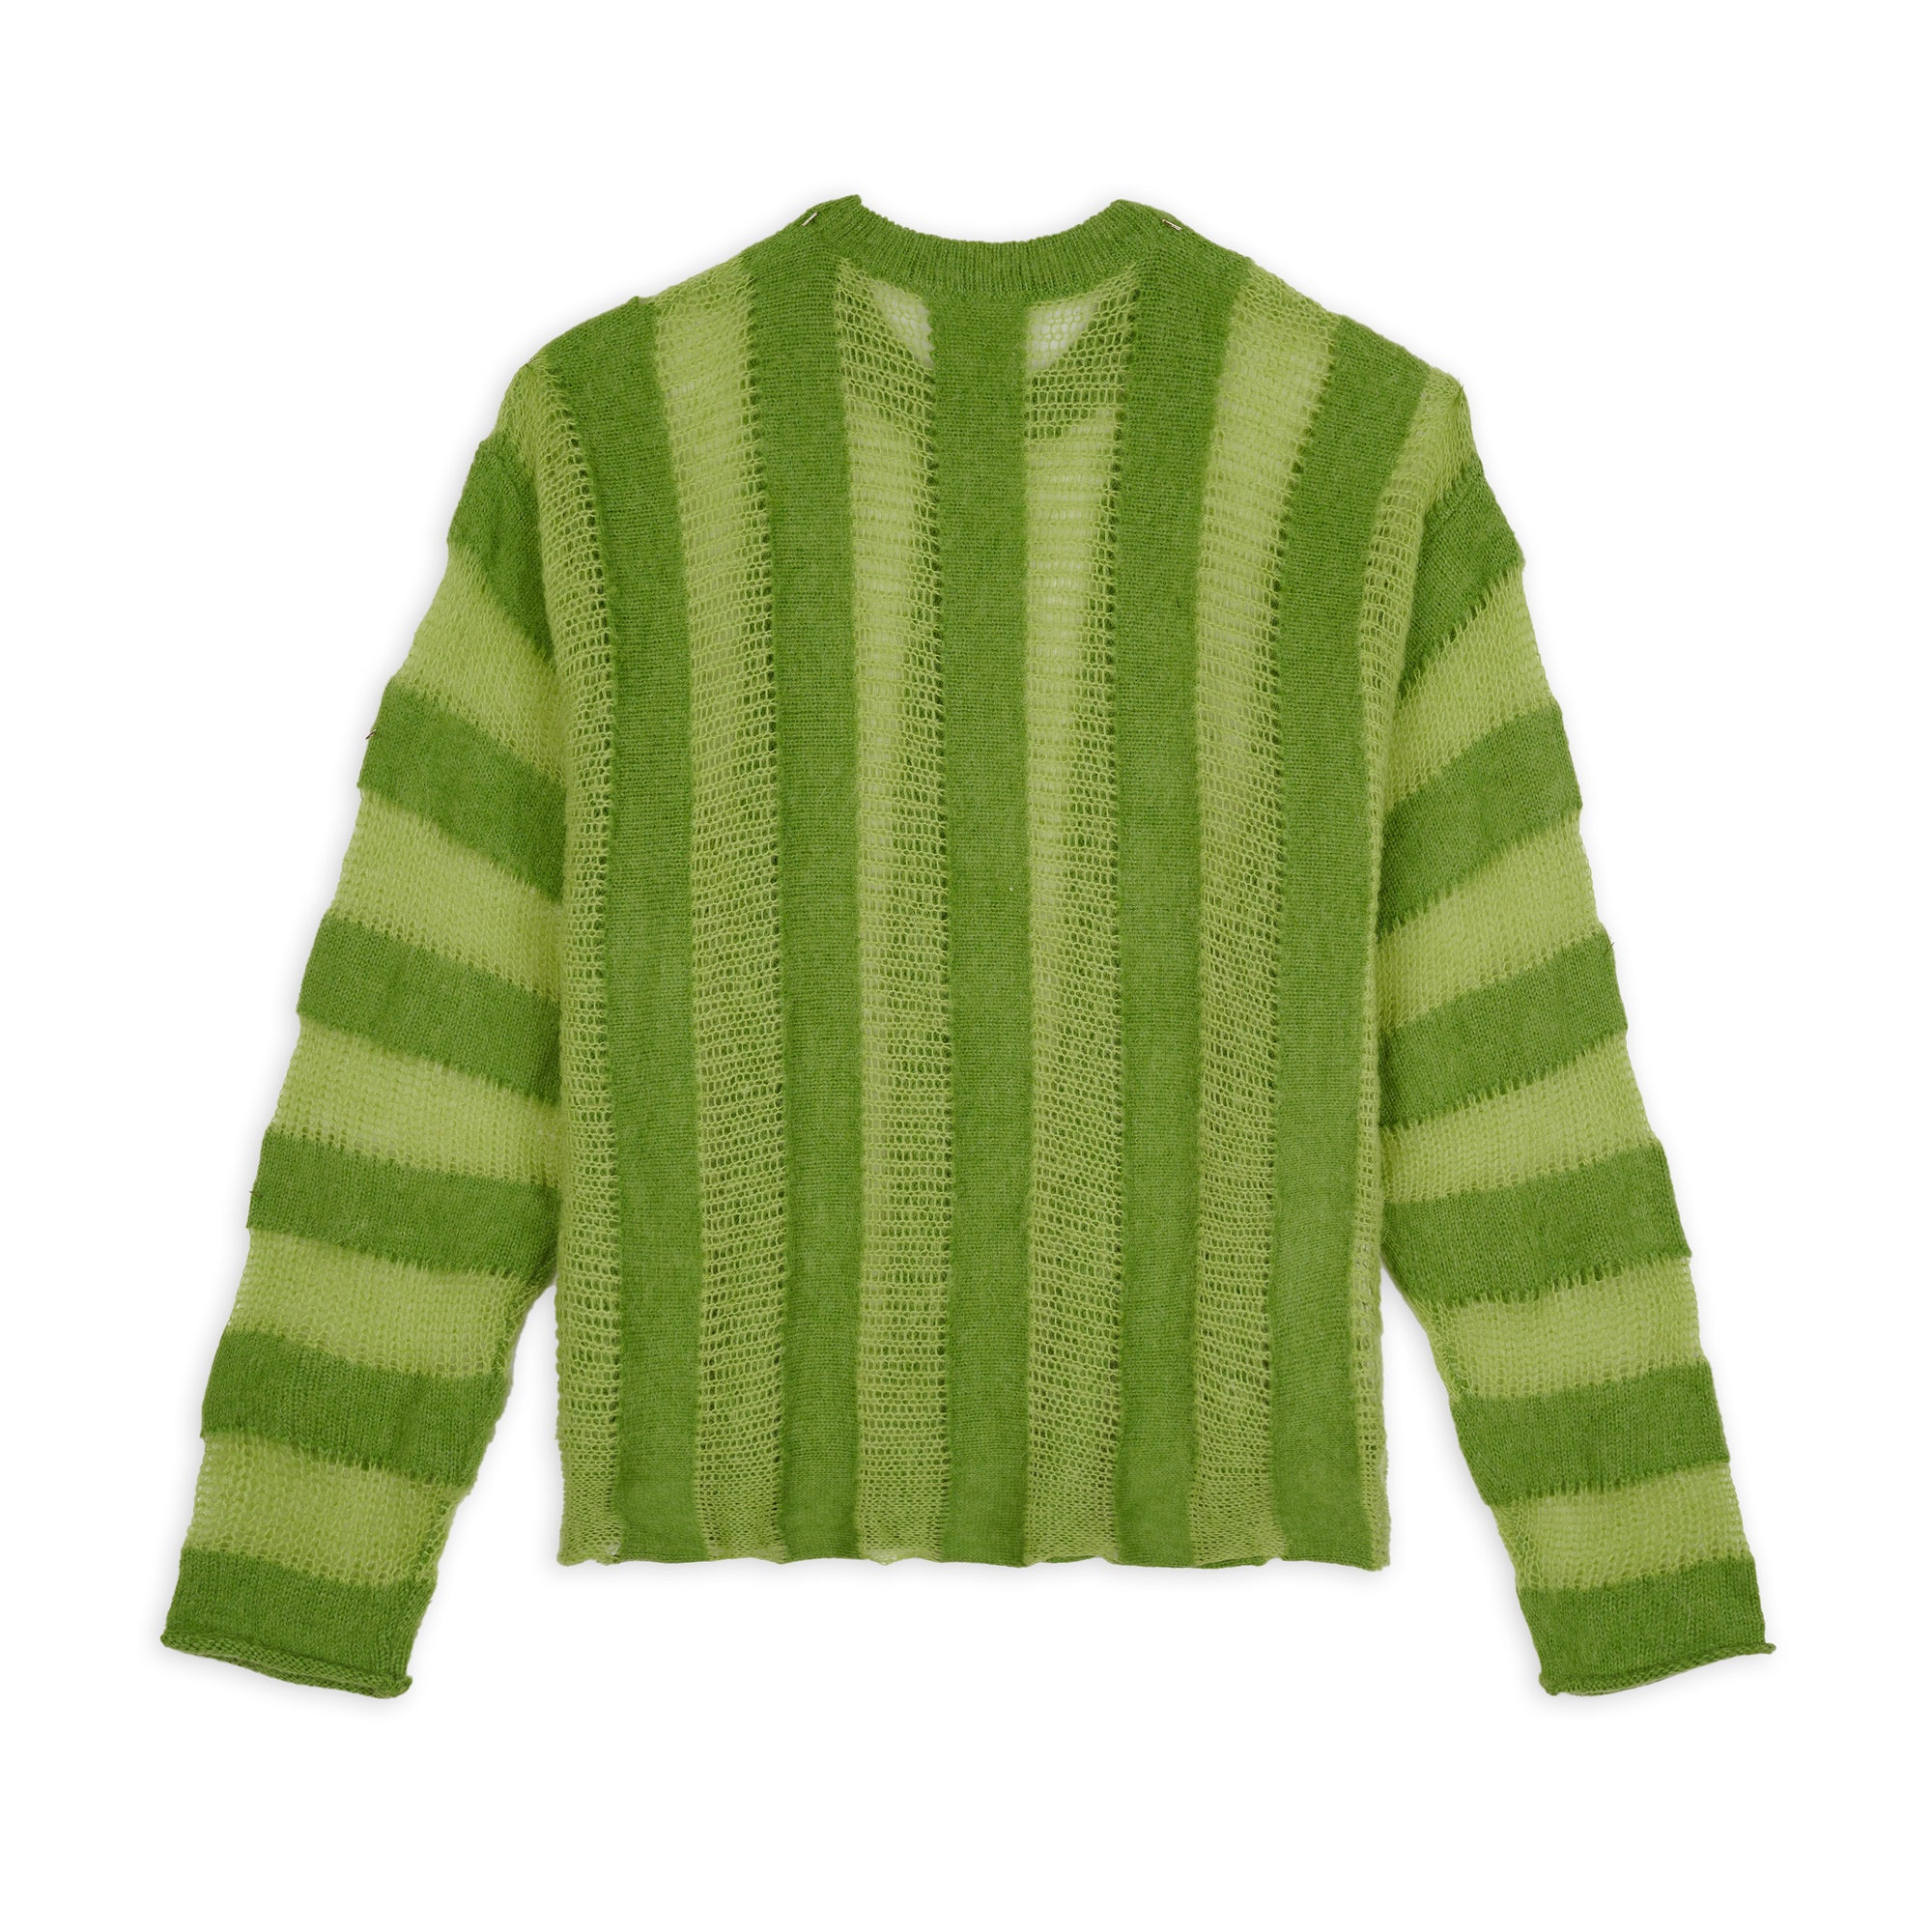 Brain Dead - Men's Fuzzy Threadbare Sweater - (Green) view 2